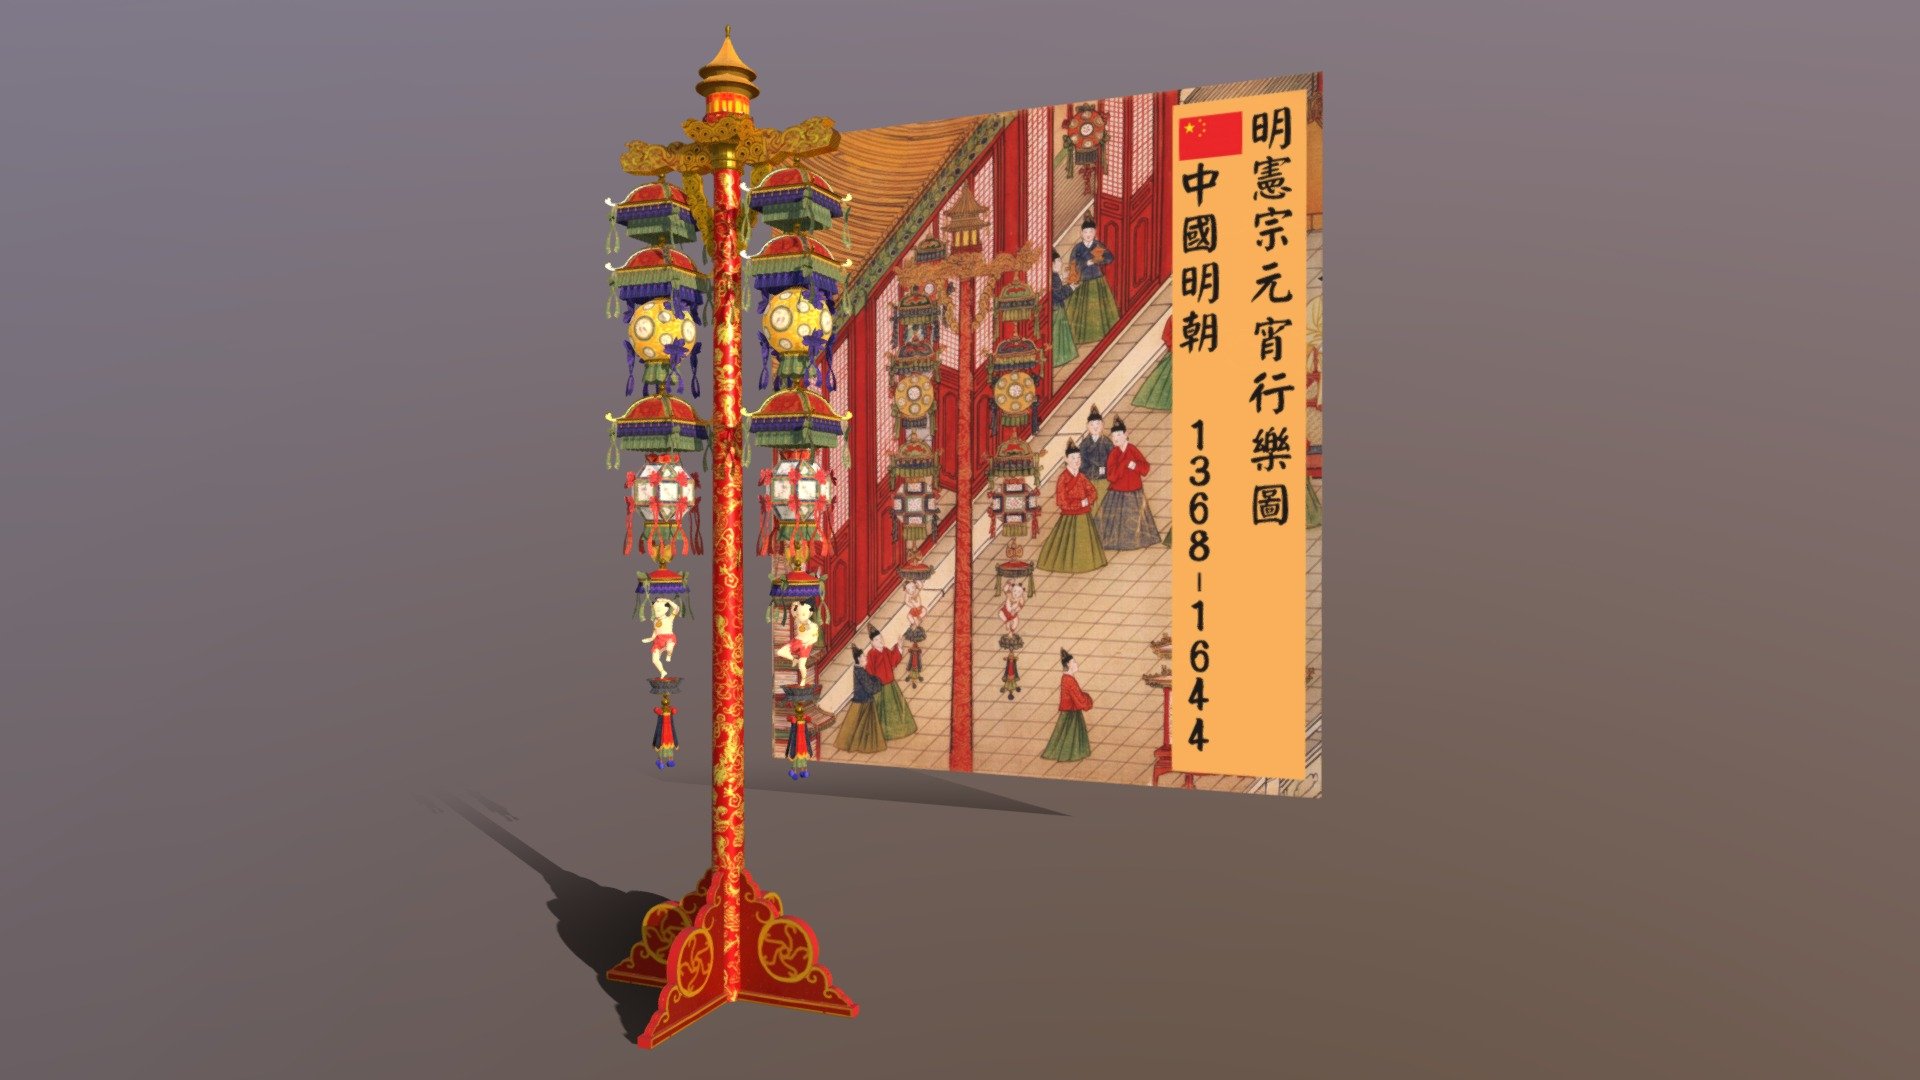 Ming Dynasty - YuanXiao lantern - China 明代元宵花灯 复原自明代明宪宗元宵行乐图 - Ming Dynasty - YuanXiao lantern 明代元宵花灯 - 3D model by dablive 3d model